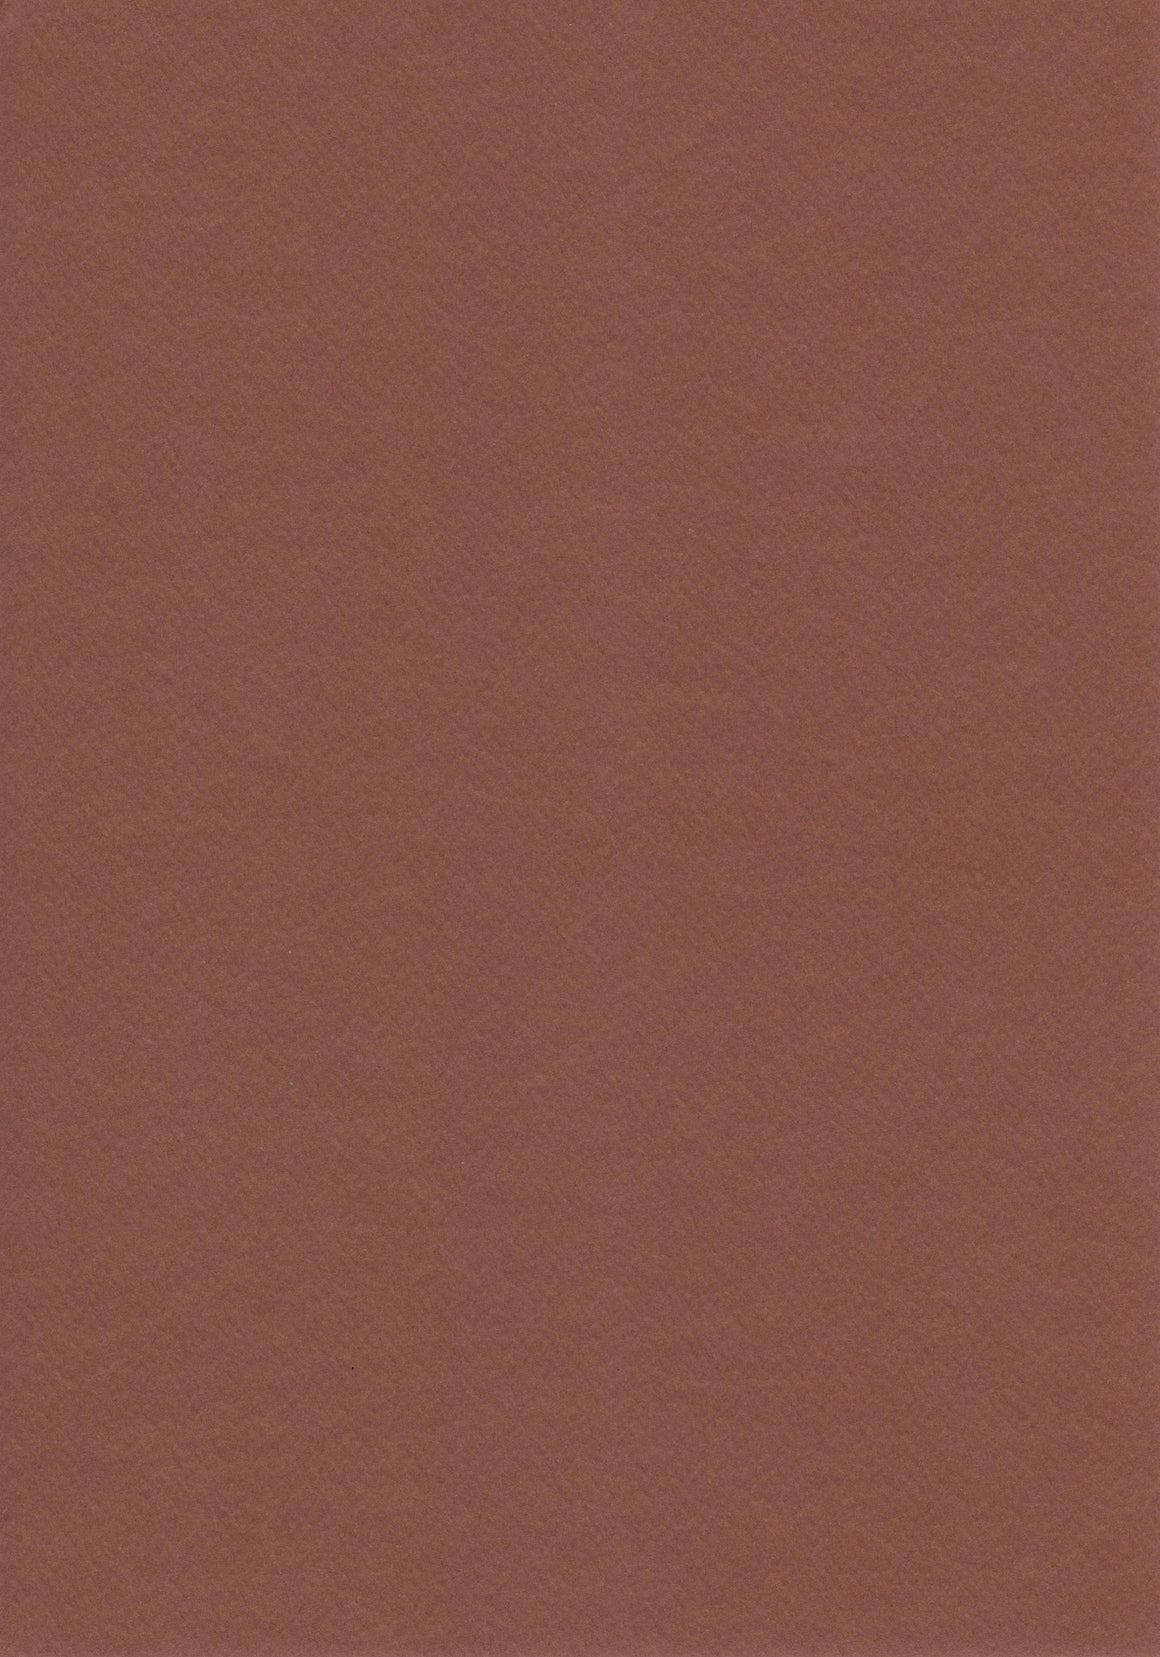 Chocolate Brown A4 Card